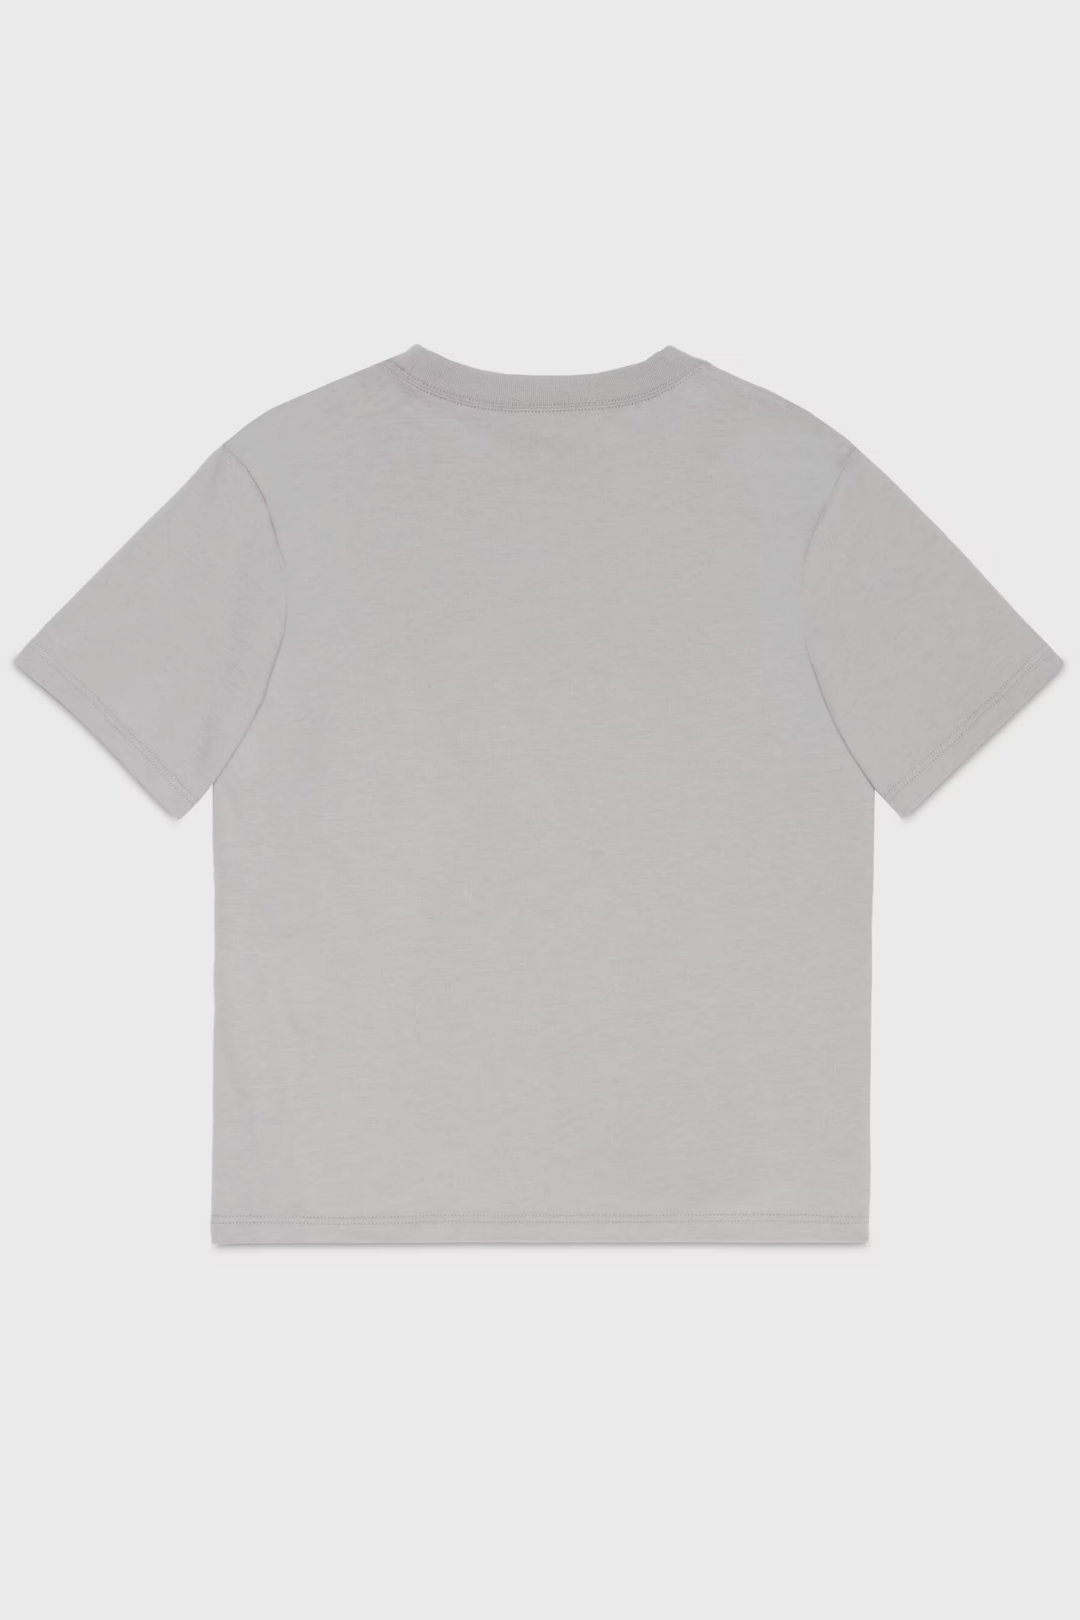 Children's Original Gucci cotton T-shirt